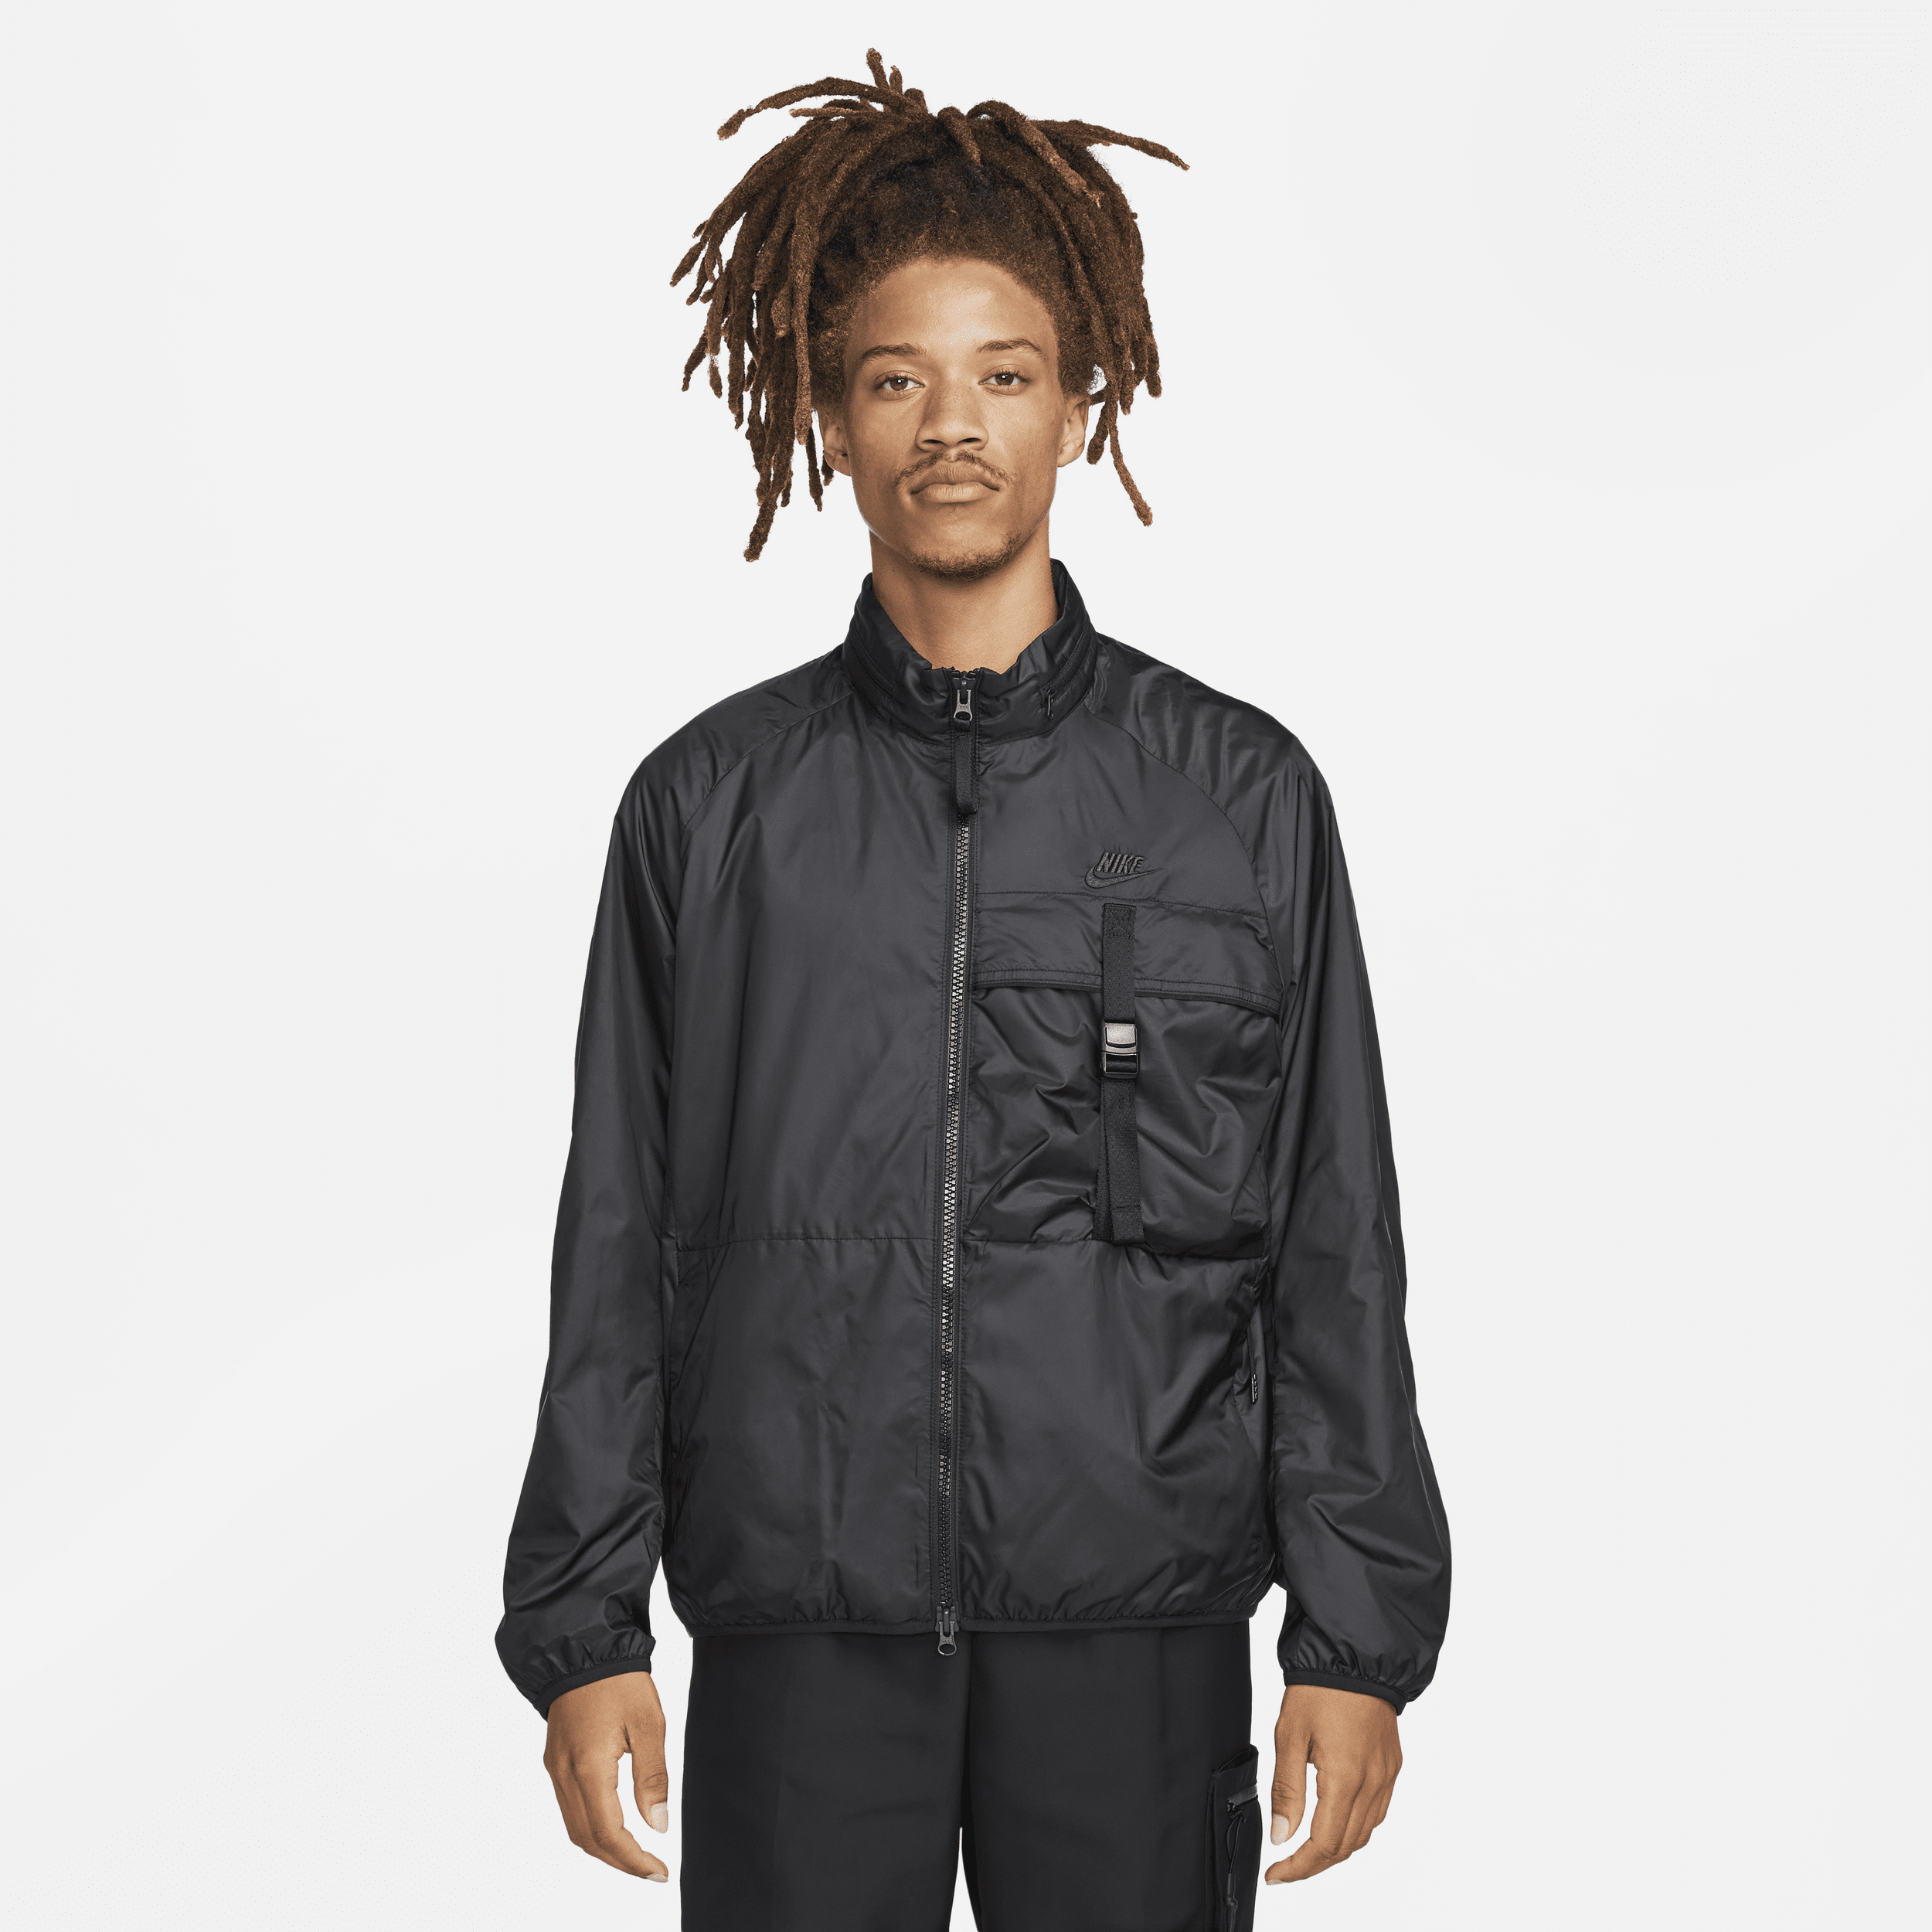 Vævet og sammenfoldelig Nike Sportswear Tech N24-jakke med for til mænd - sort